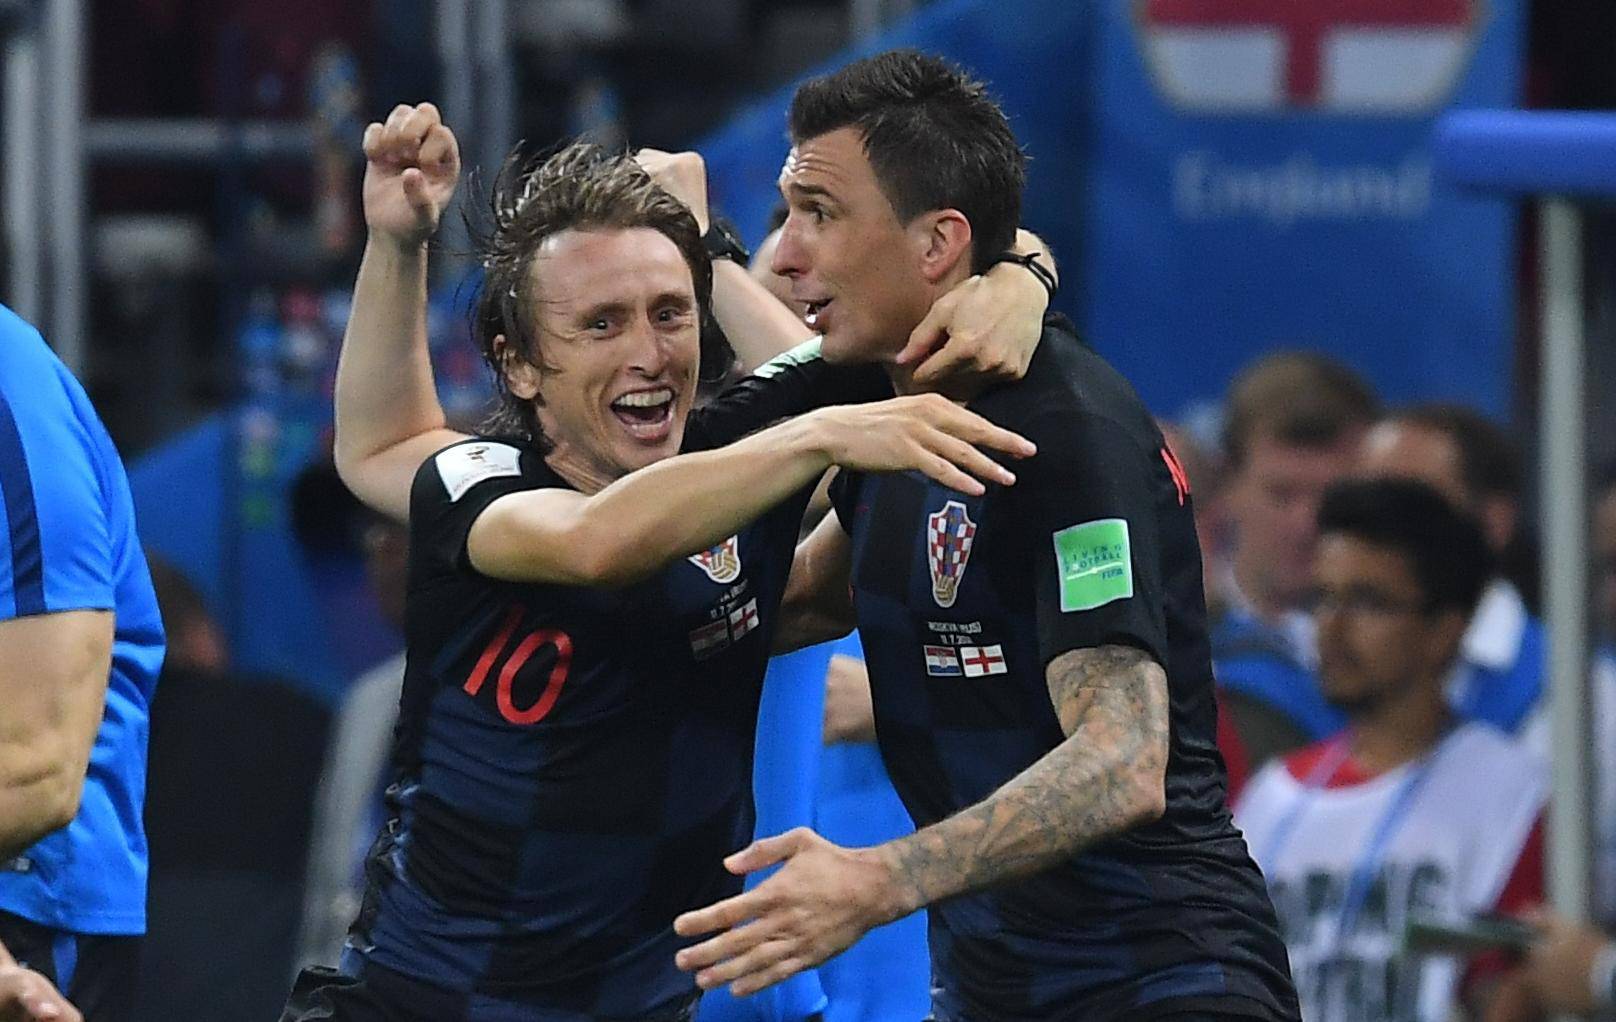 GES / Football / World Cup 2018 / Croatia - England, Match 62, 11.07.2018